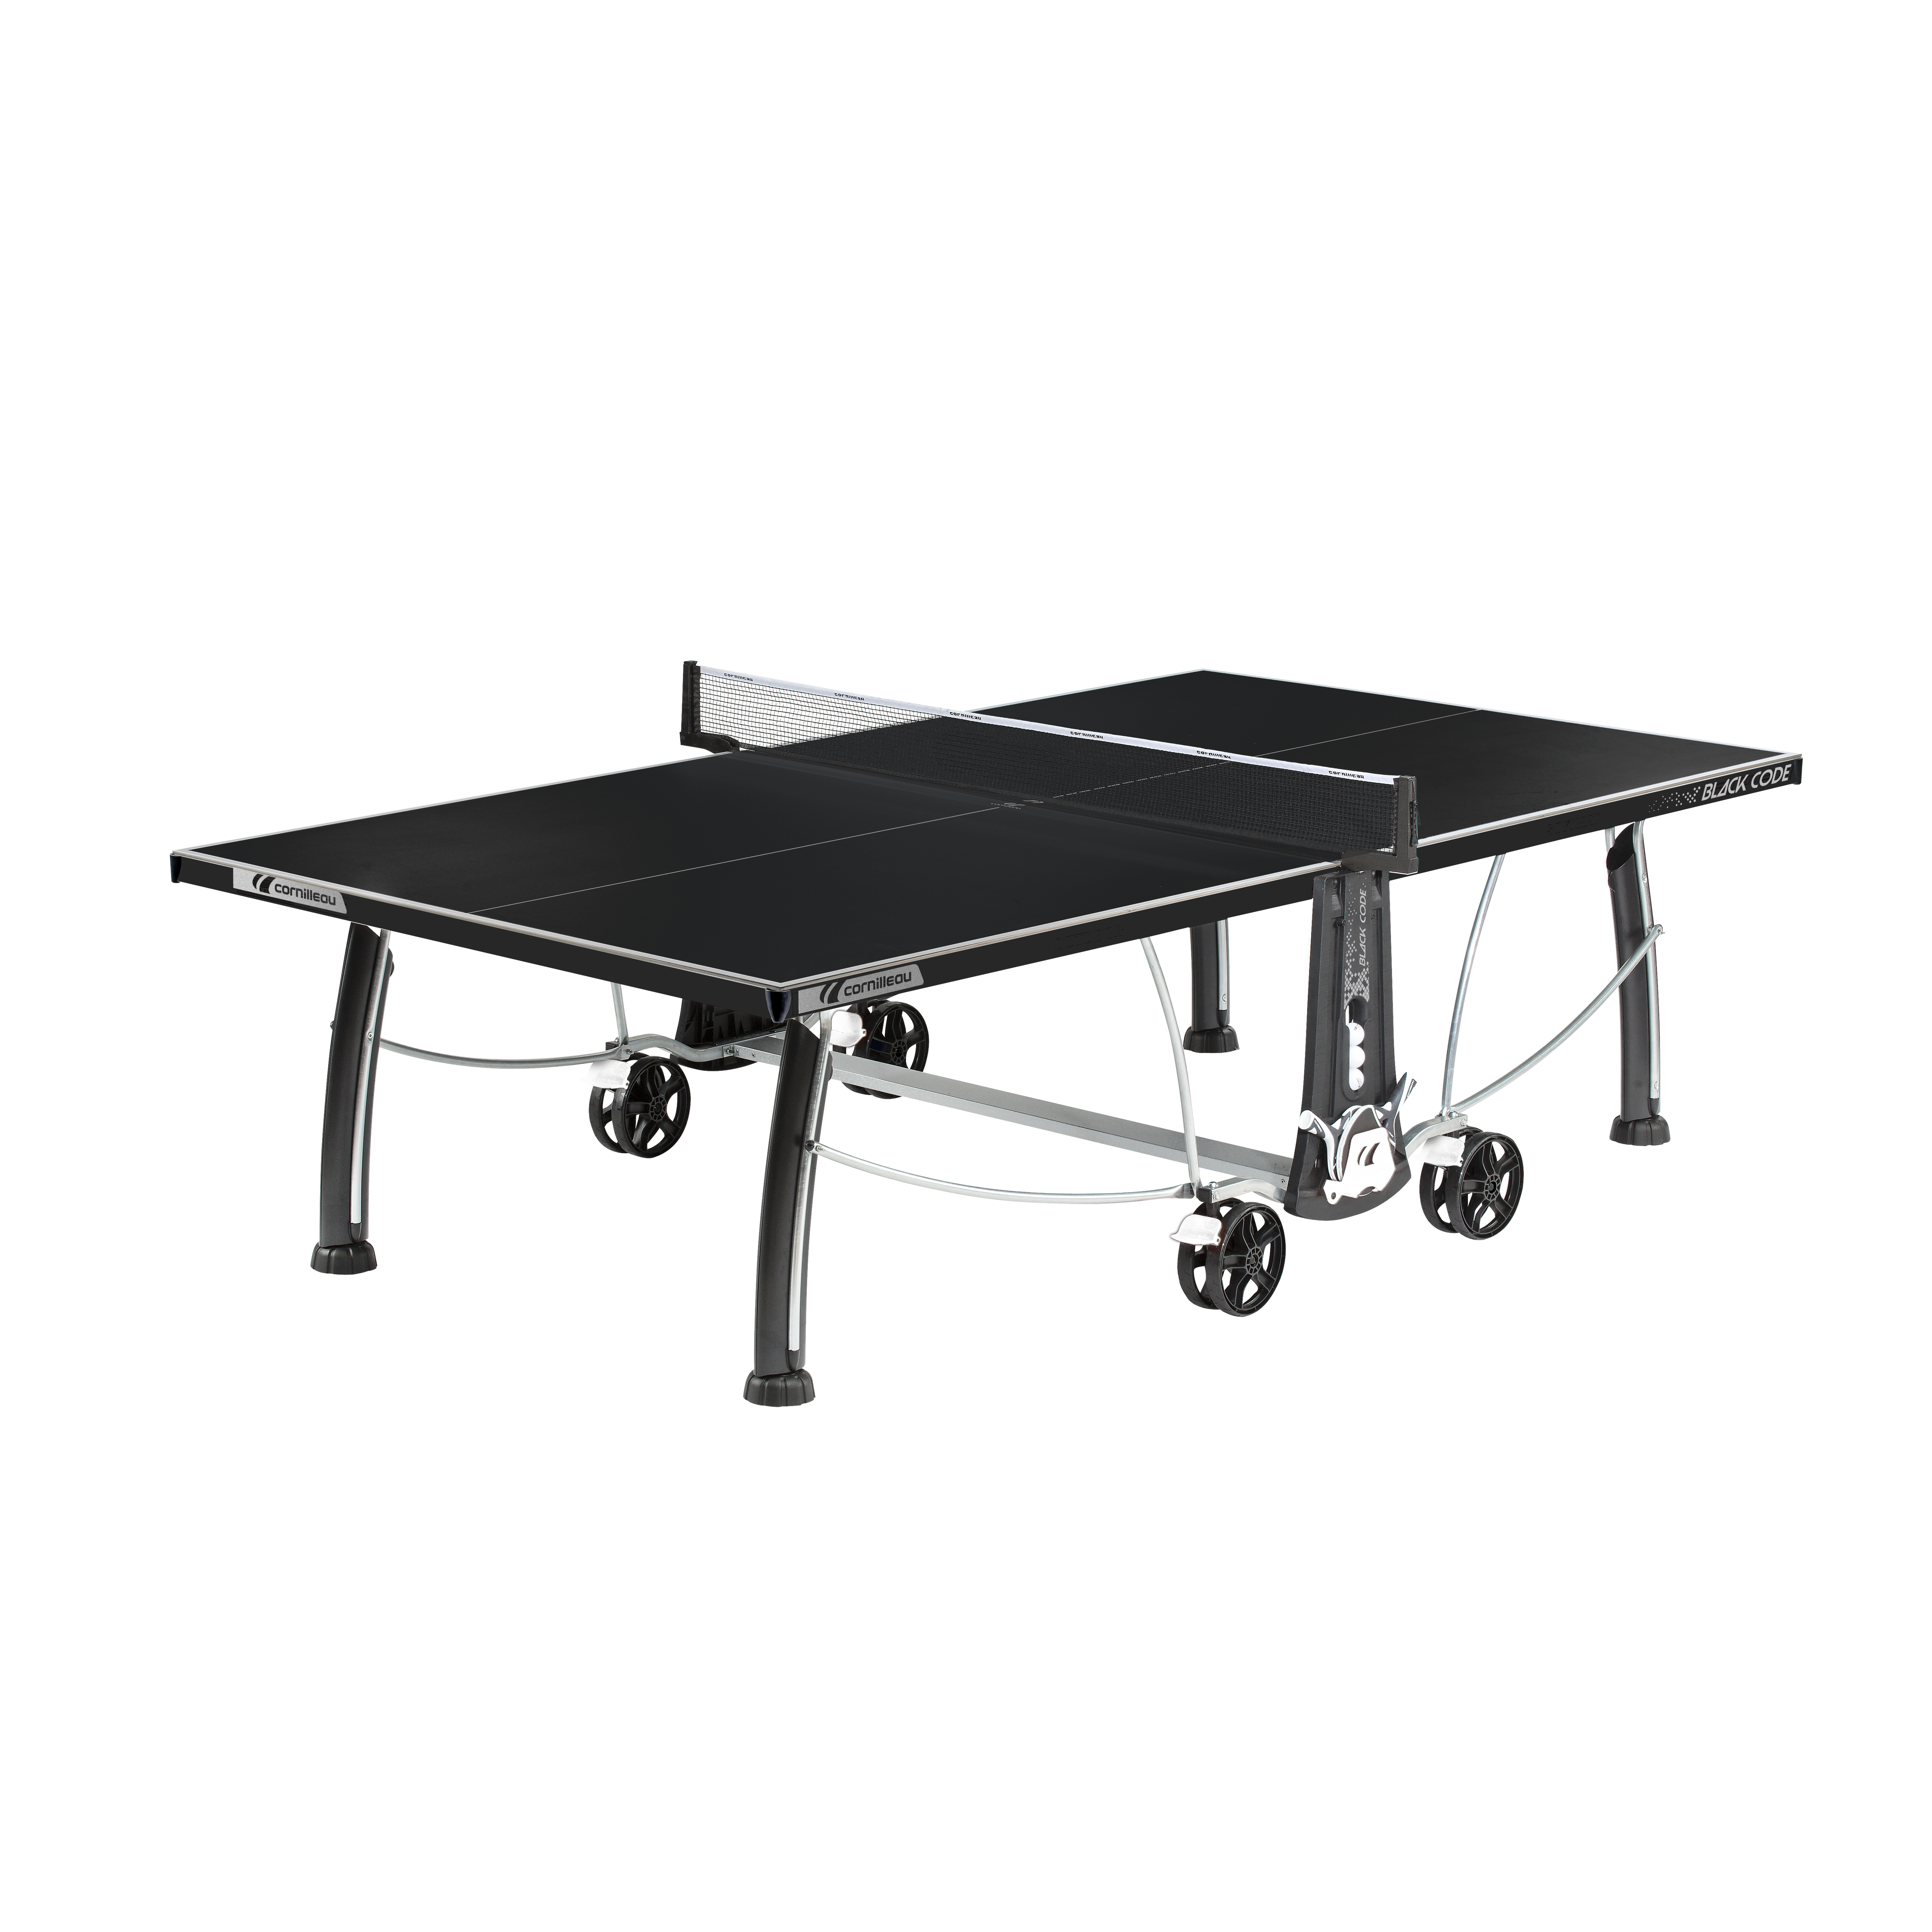 Panorama Dicteren Van Cornilleau Black Code Outdoor Table Tennis Table - eFamilyFun